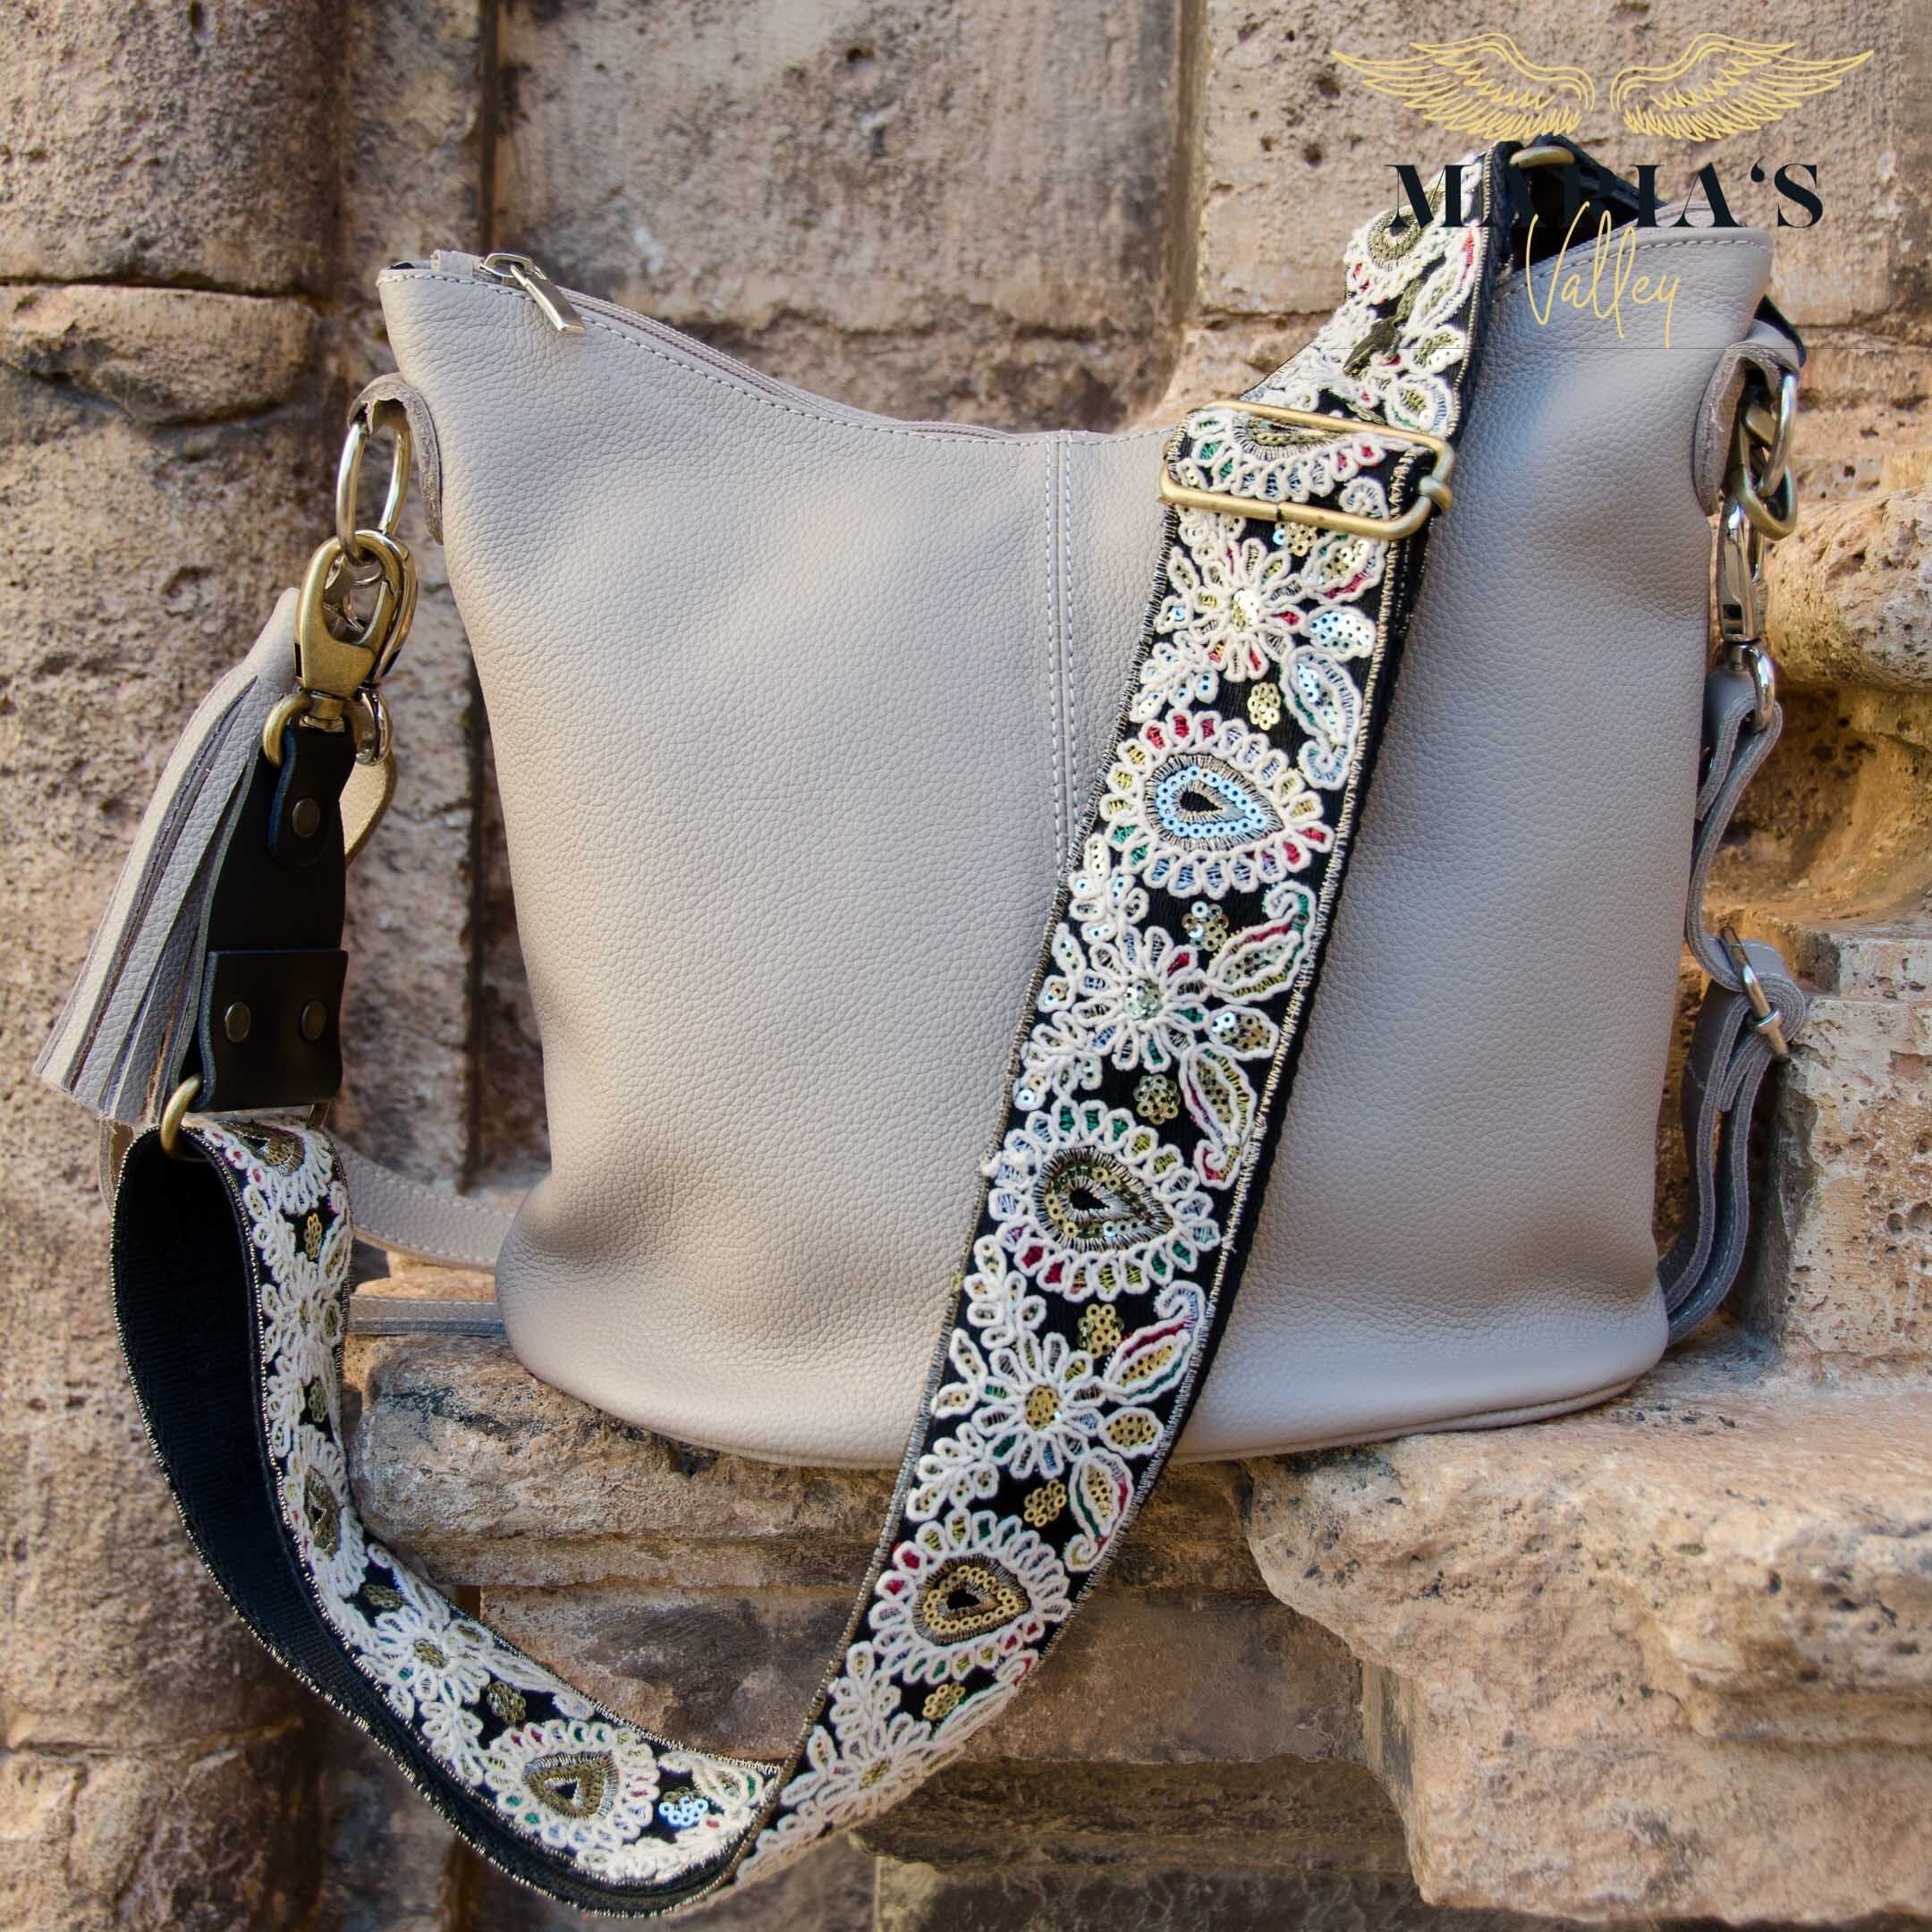 Buy wholesale Guitar strap purse with sequin details. Handbag